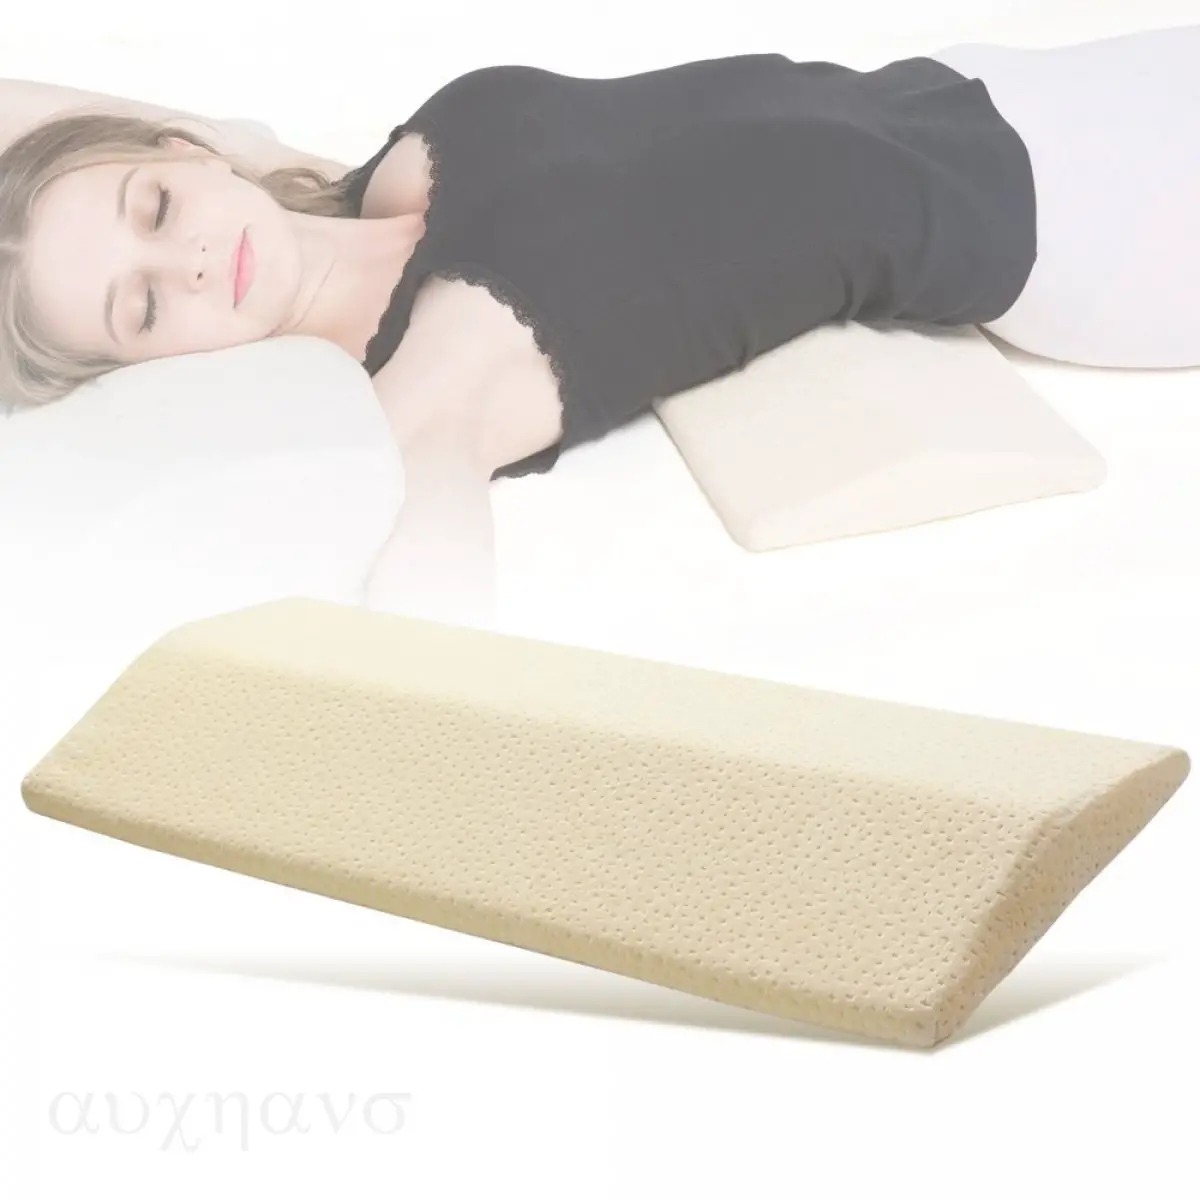 Support Lumbar Wedge Memory Foam Sleep Bed Cushion Lower Back Pain ...